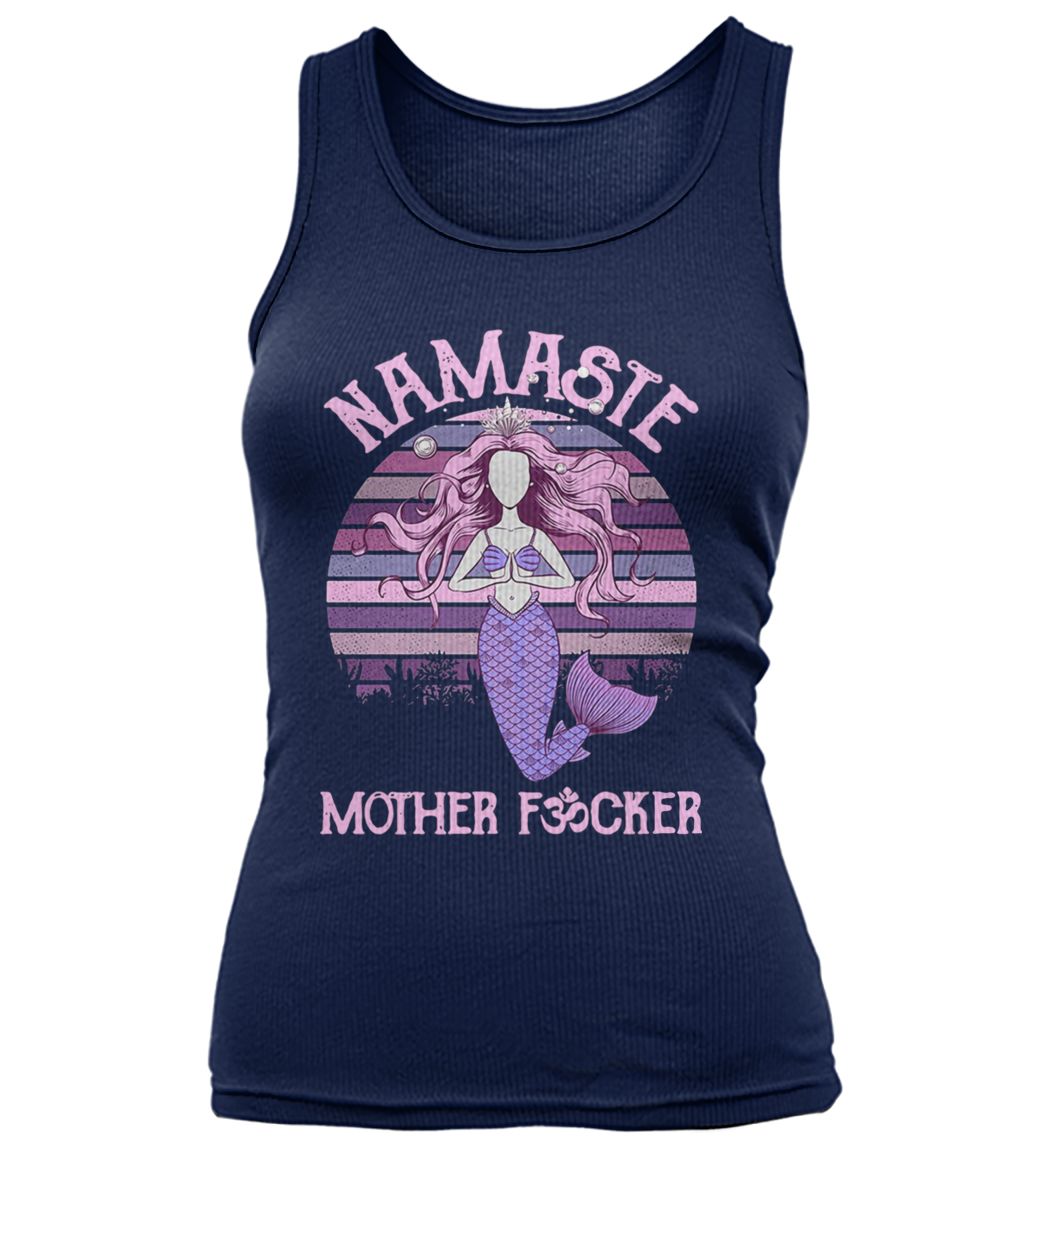 Yoga mermaid namaste mother fucker women's tank top